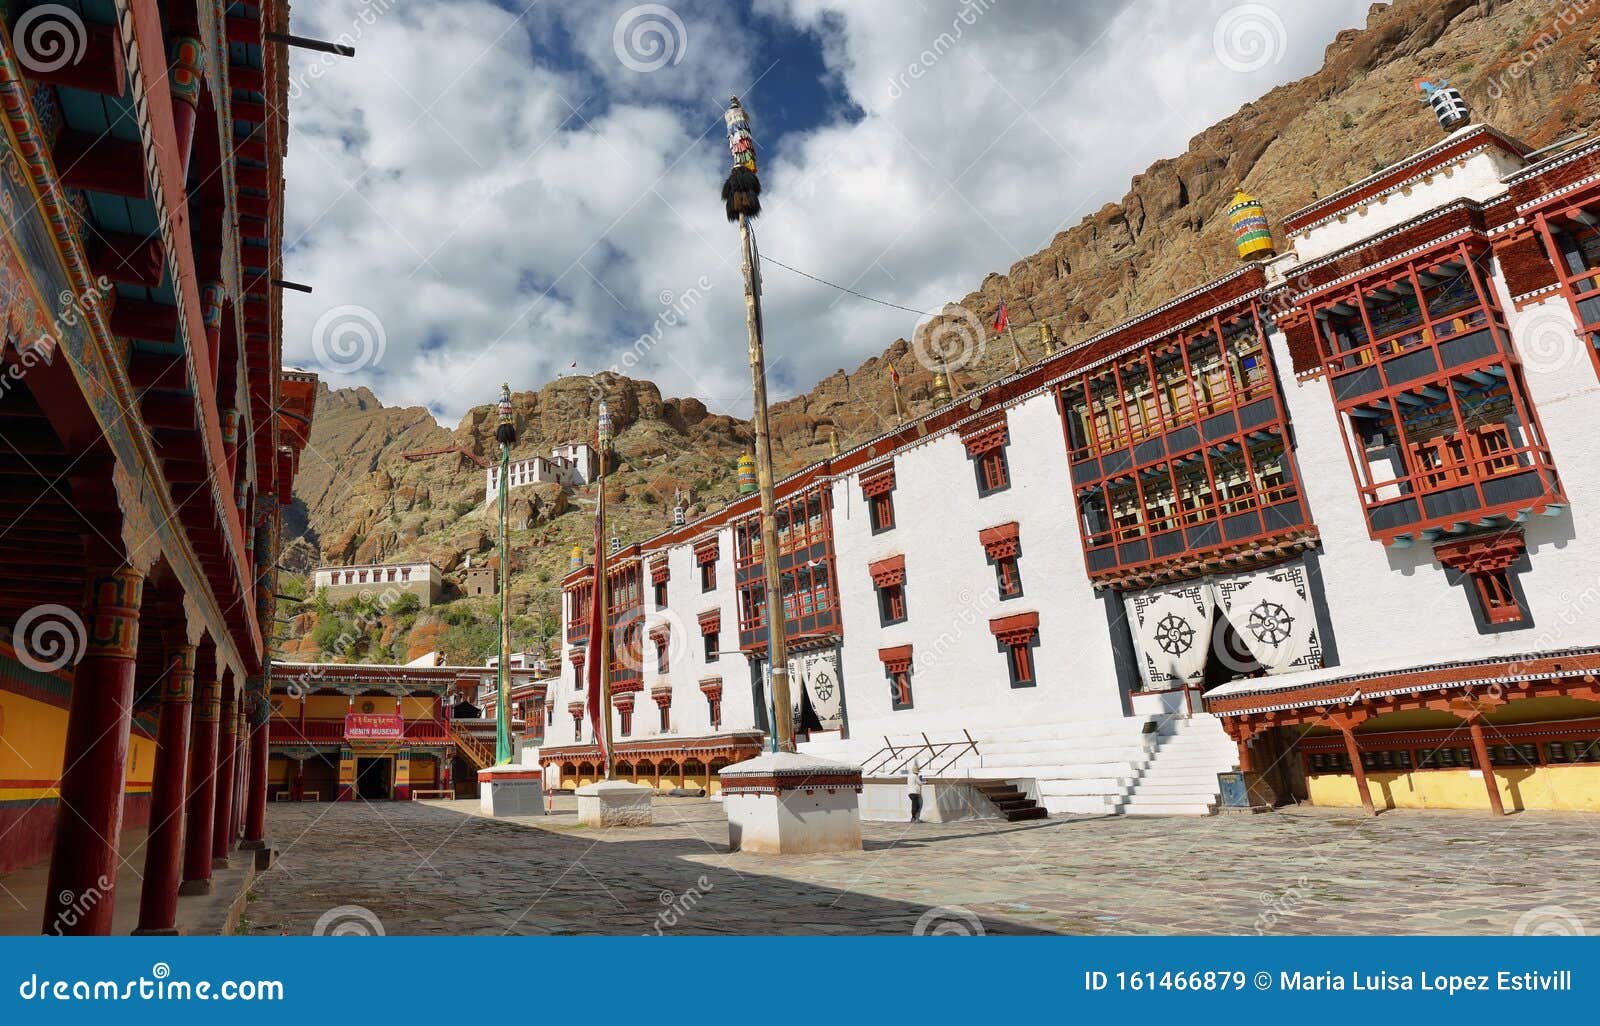 hemis monastery, in ladakh, north of india